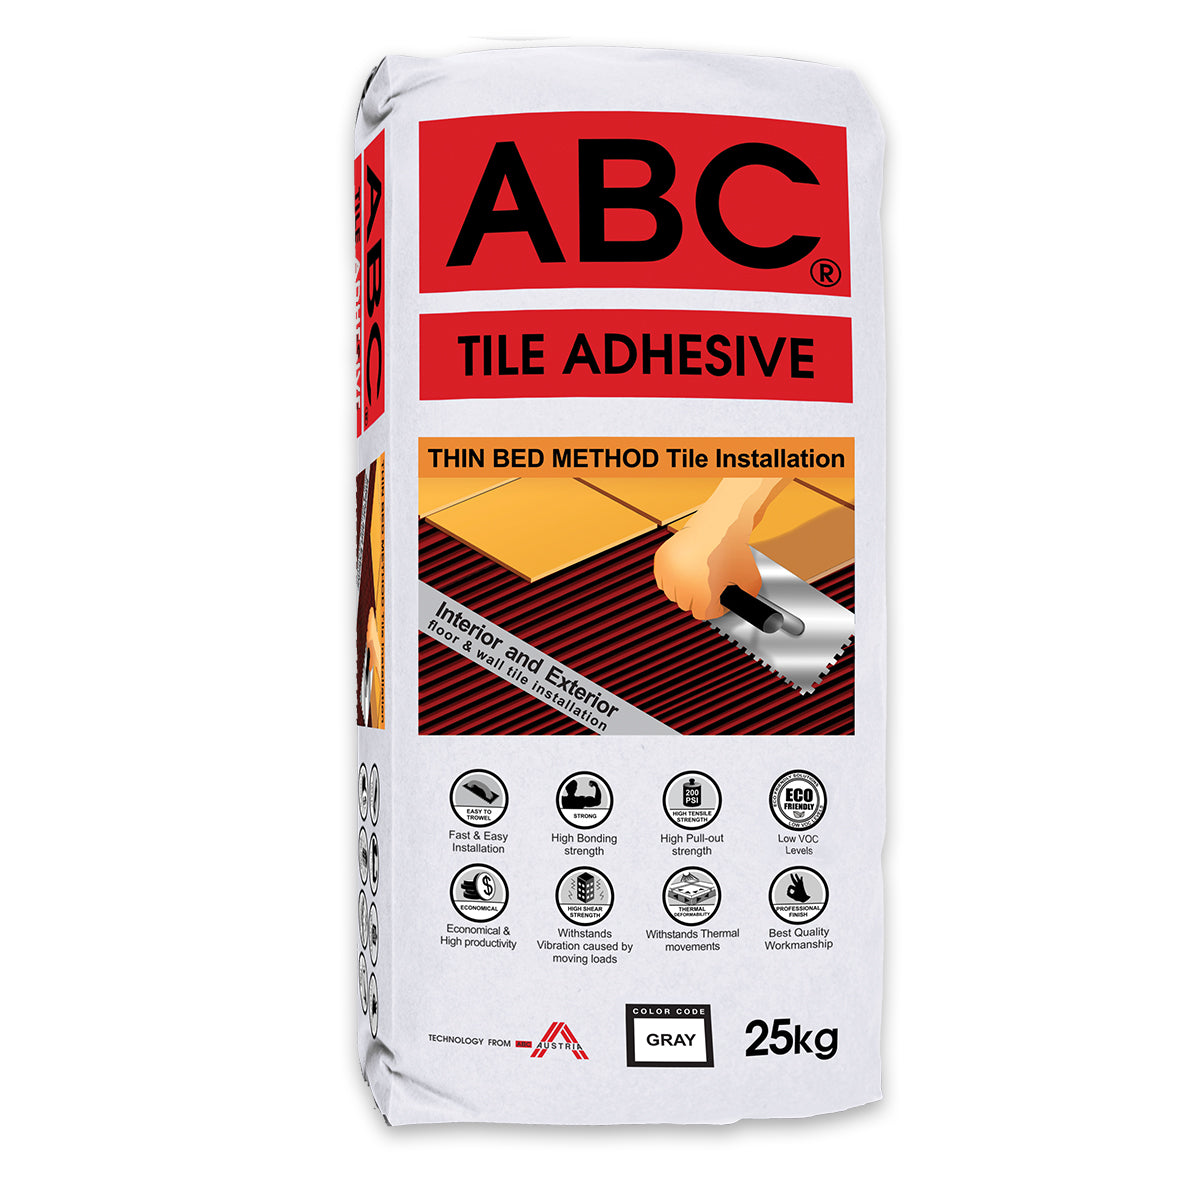 ABC Tile Adhesive Original